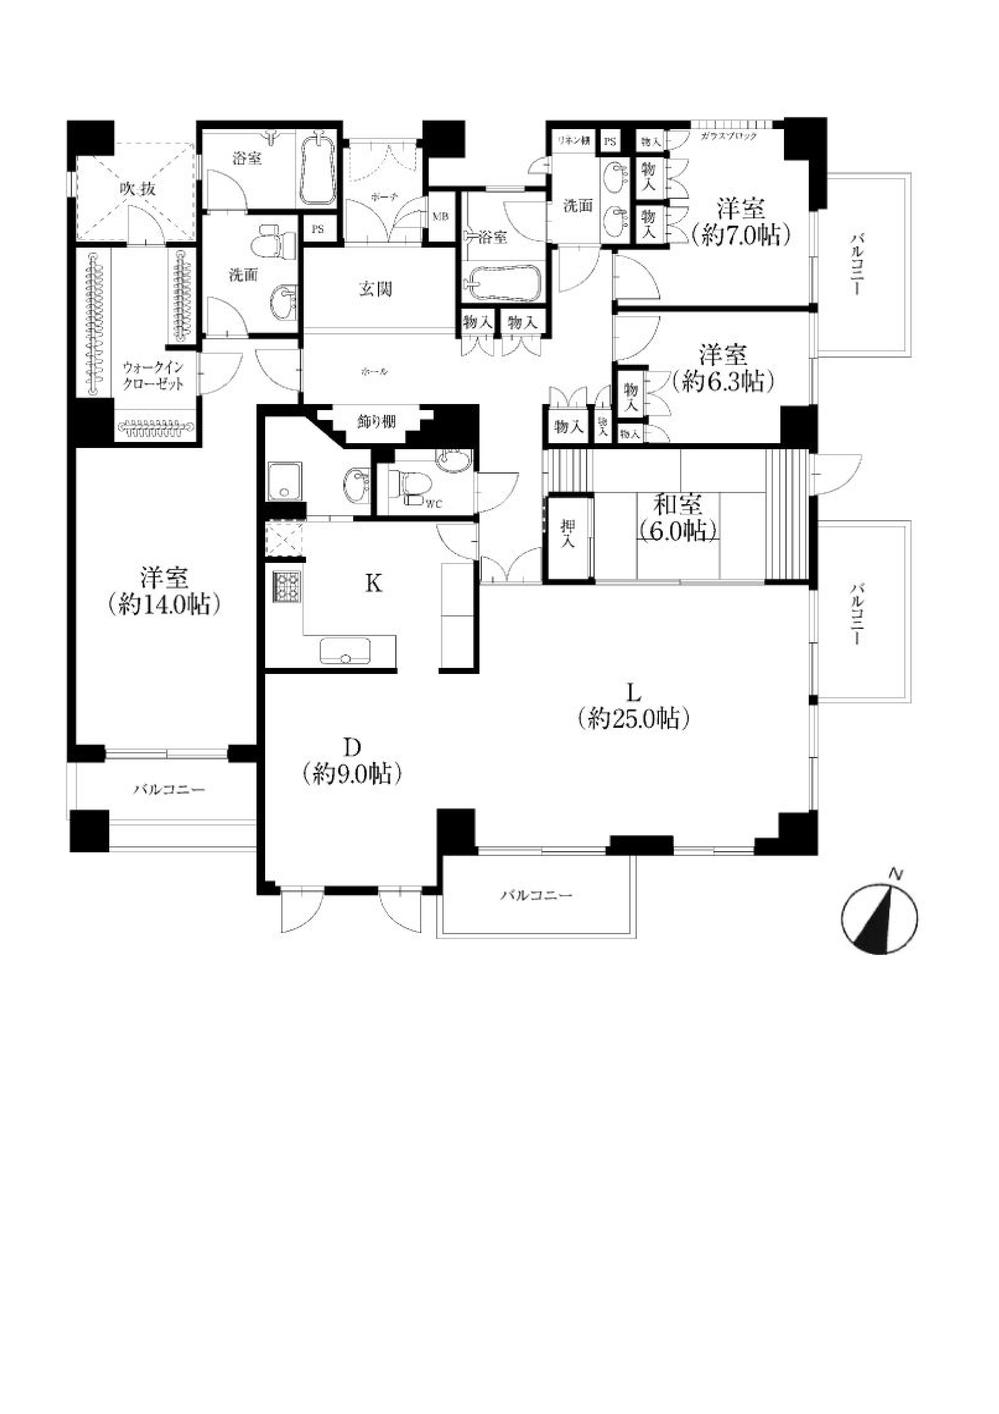 Floor plan. 4LDK, Price 66,800,000 yen, The area occupied 199.4 sq m , Balcony area 30.06 sq m